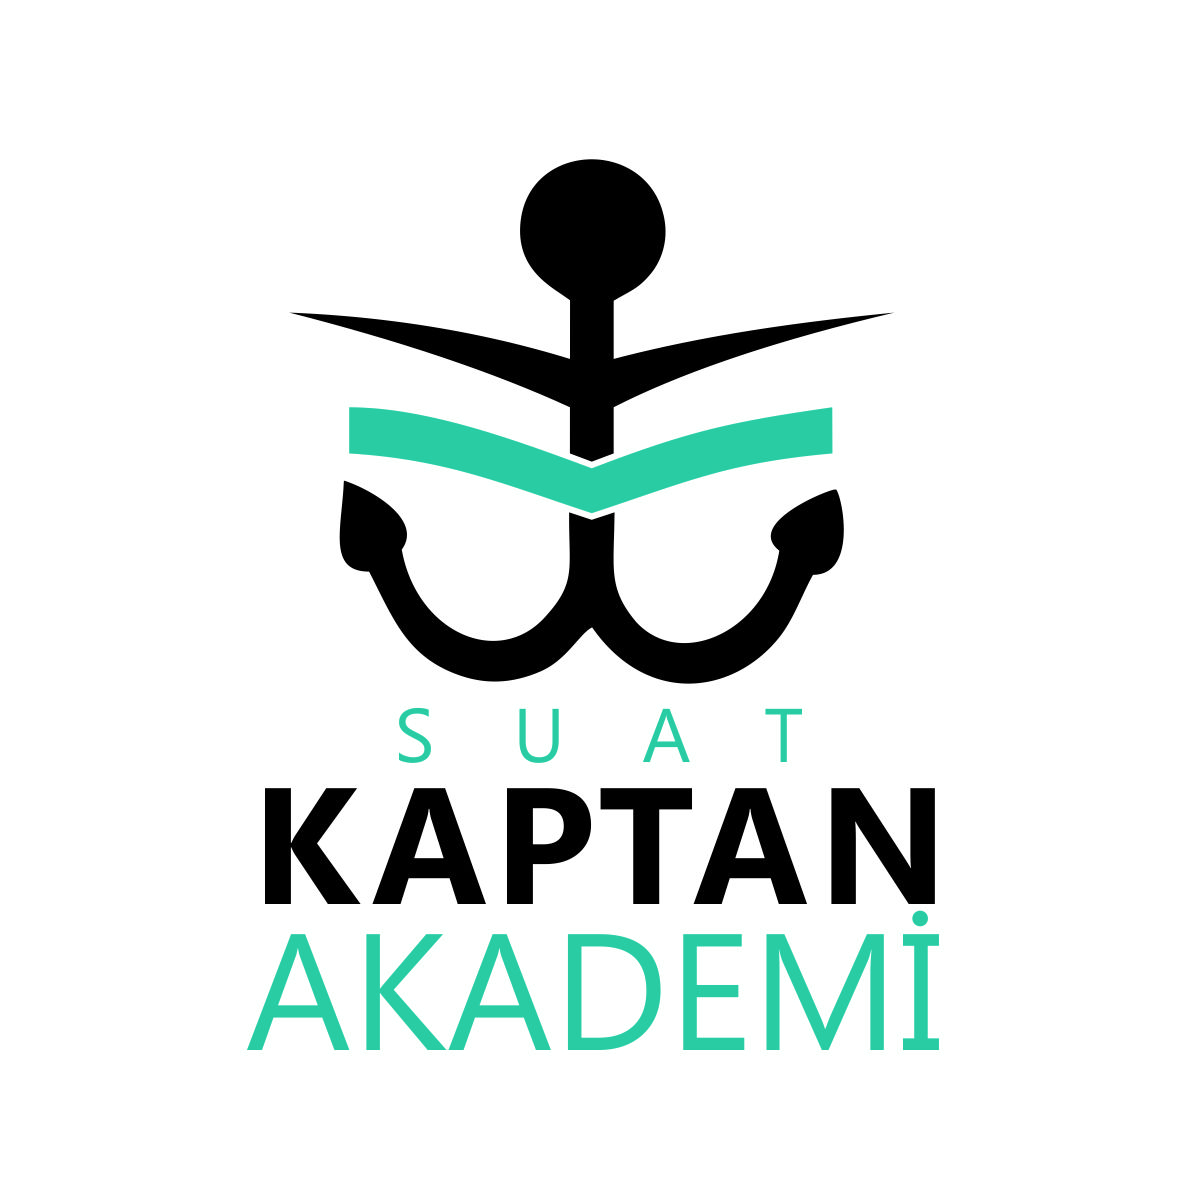 Kaptan_Akademi